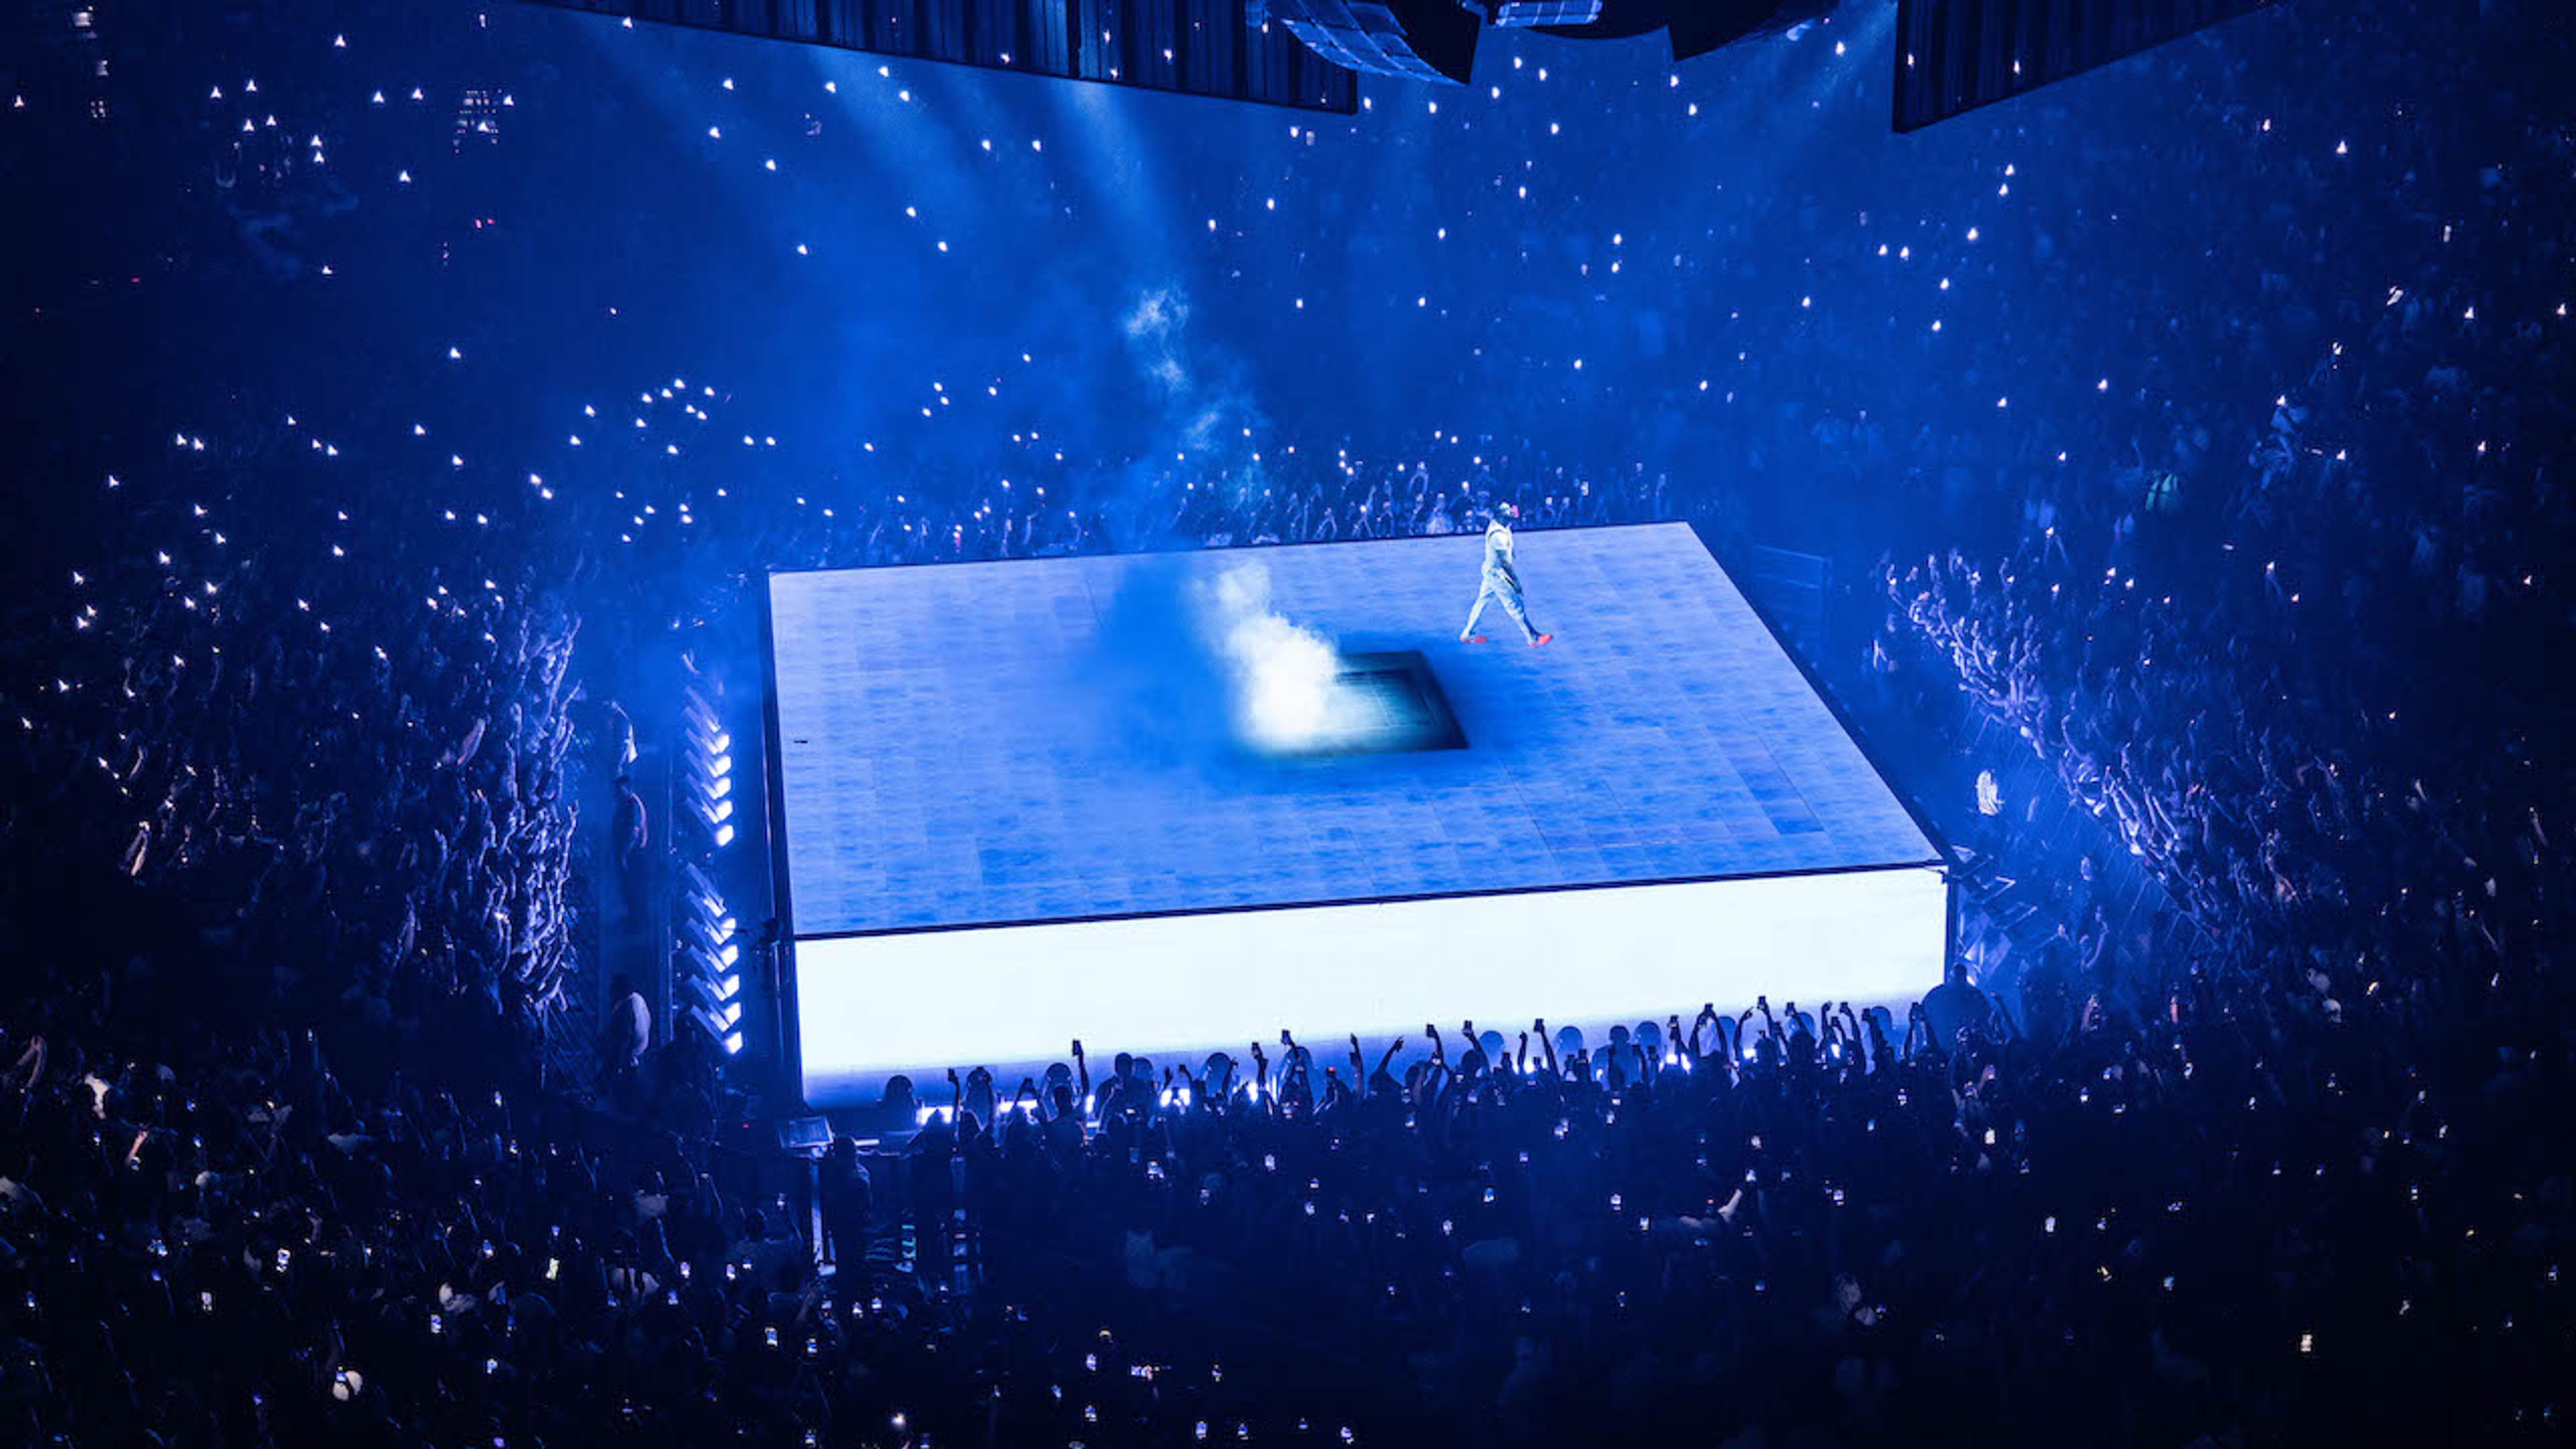 Rapper Drake performer on larger LED screen square platform with blue lighting surrounded by spectators